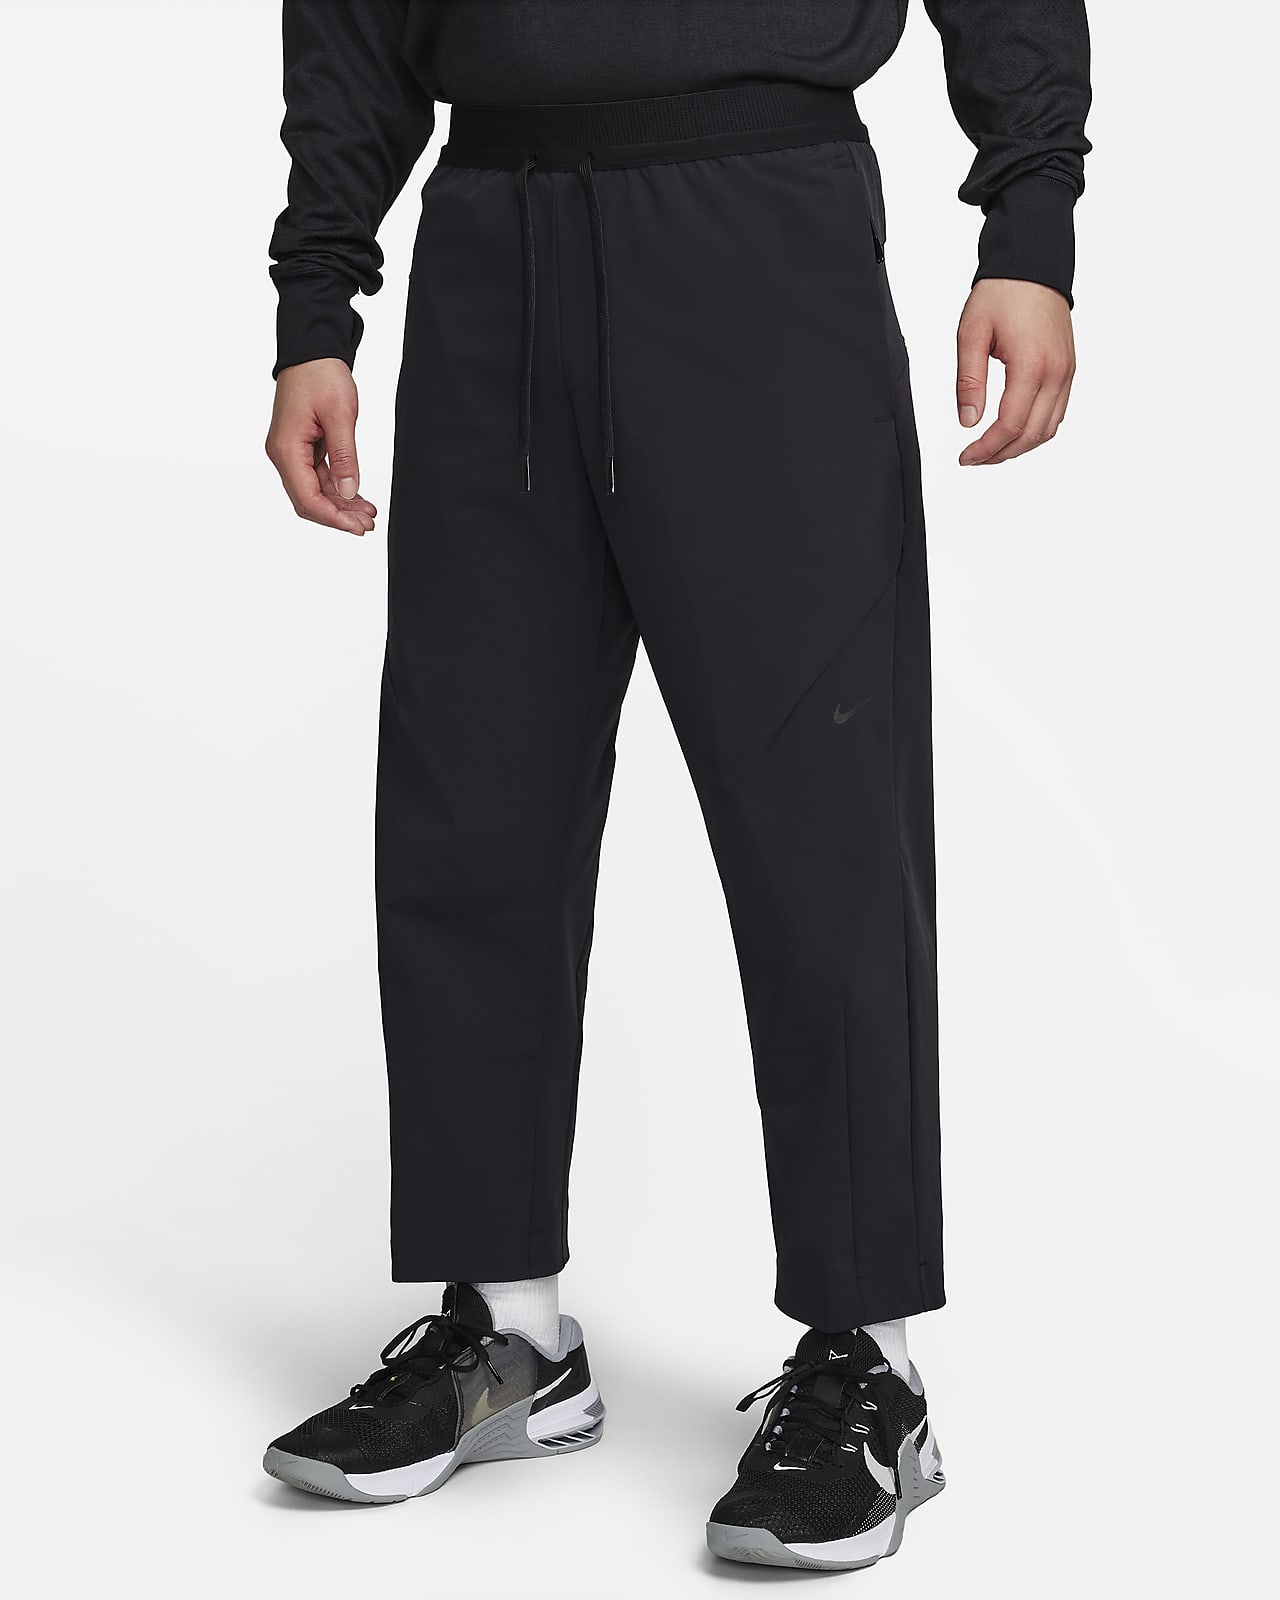 Nike A.P.S. Men's Dri-FIT Woven Versatile Pants